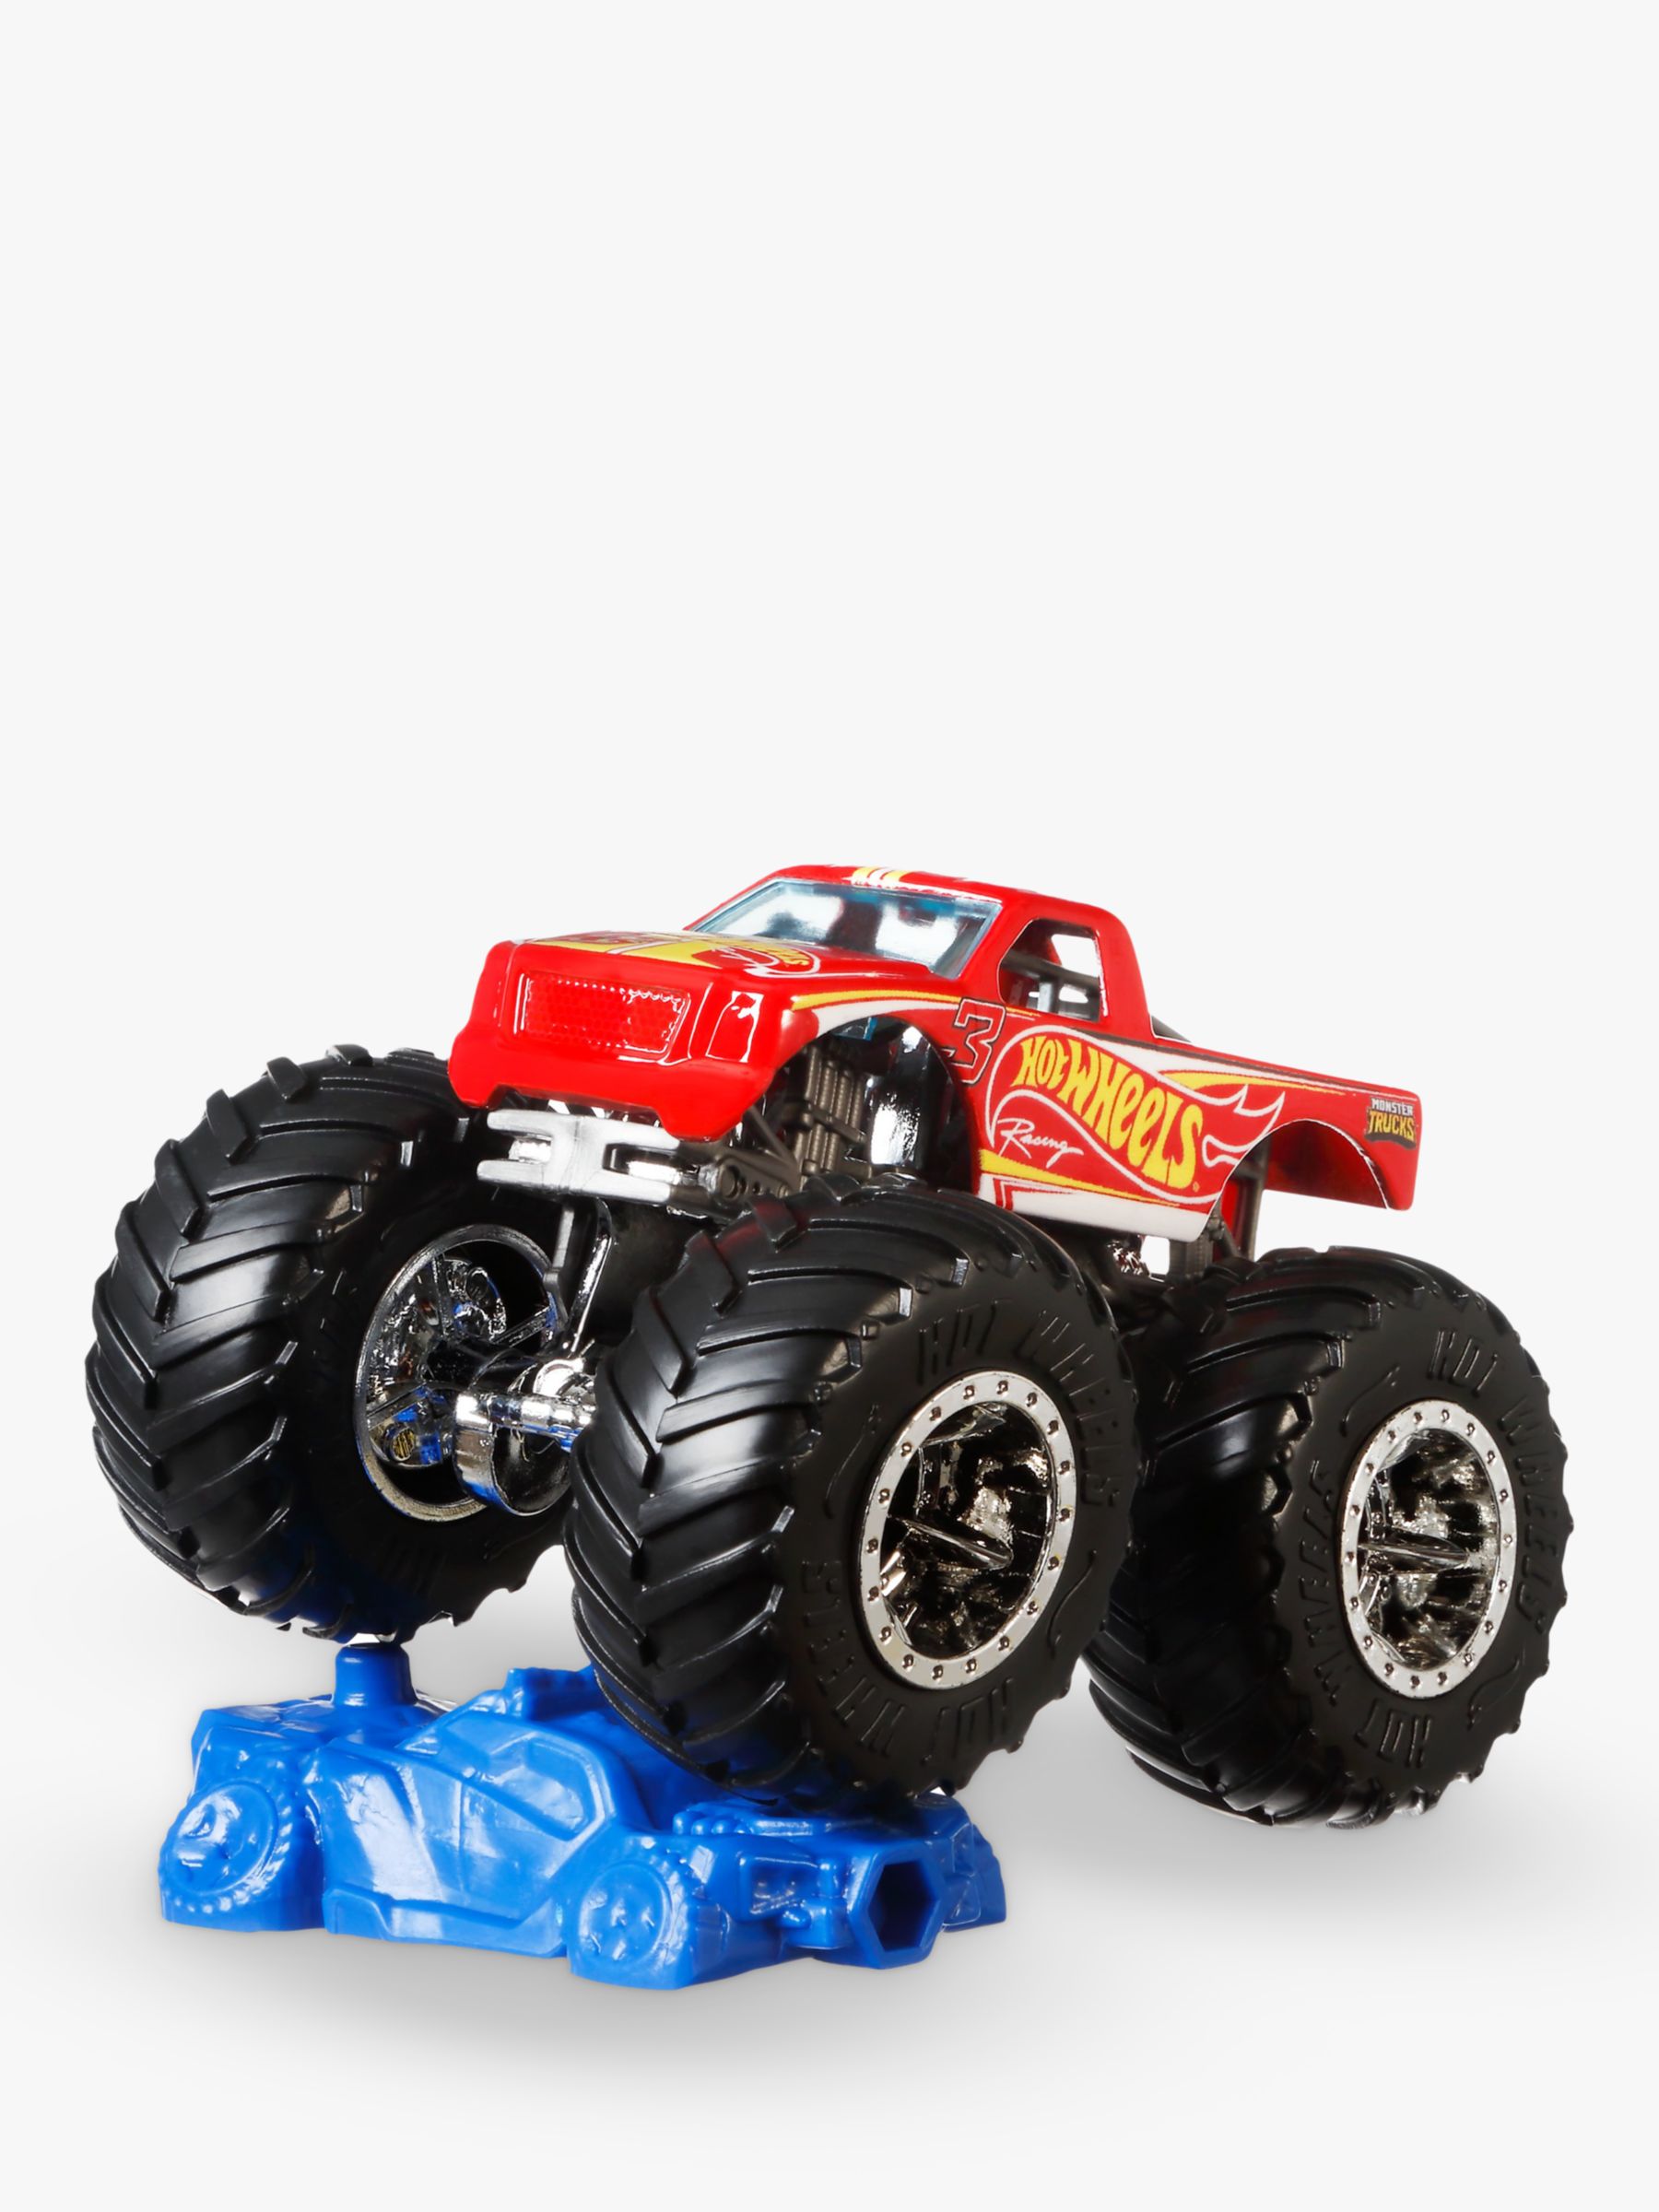 rainbow monster truck toy